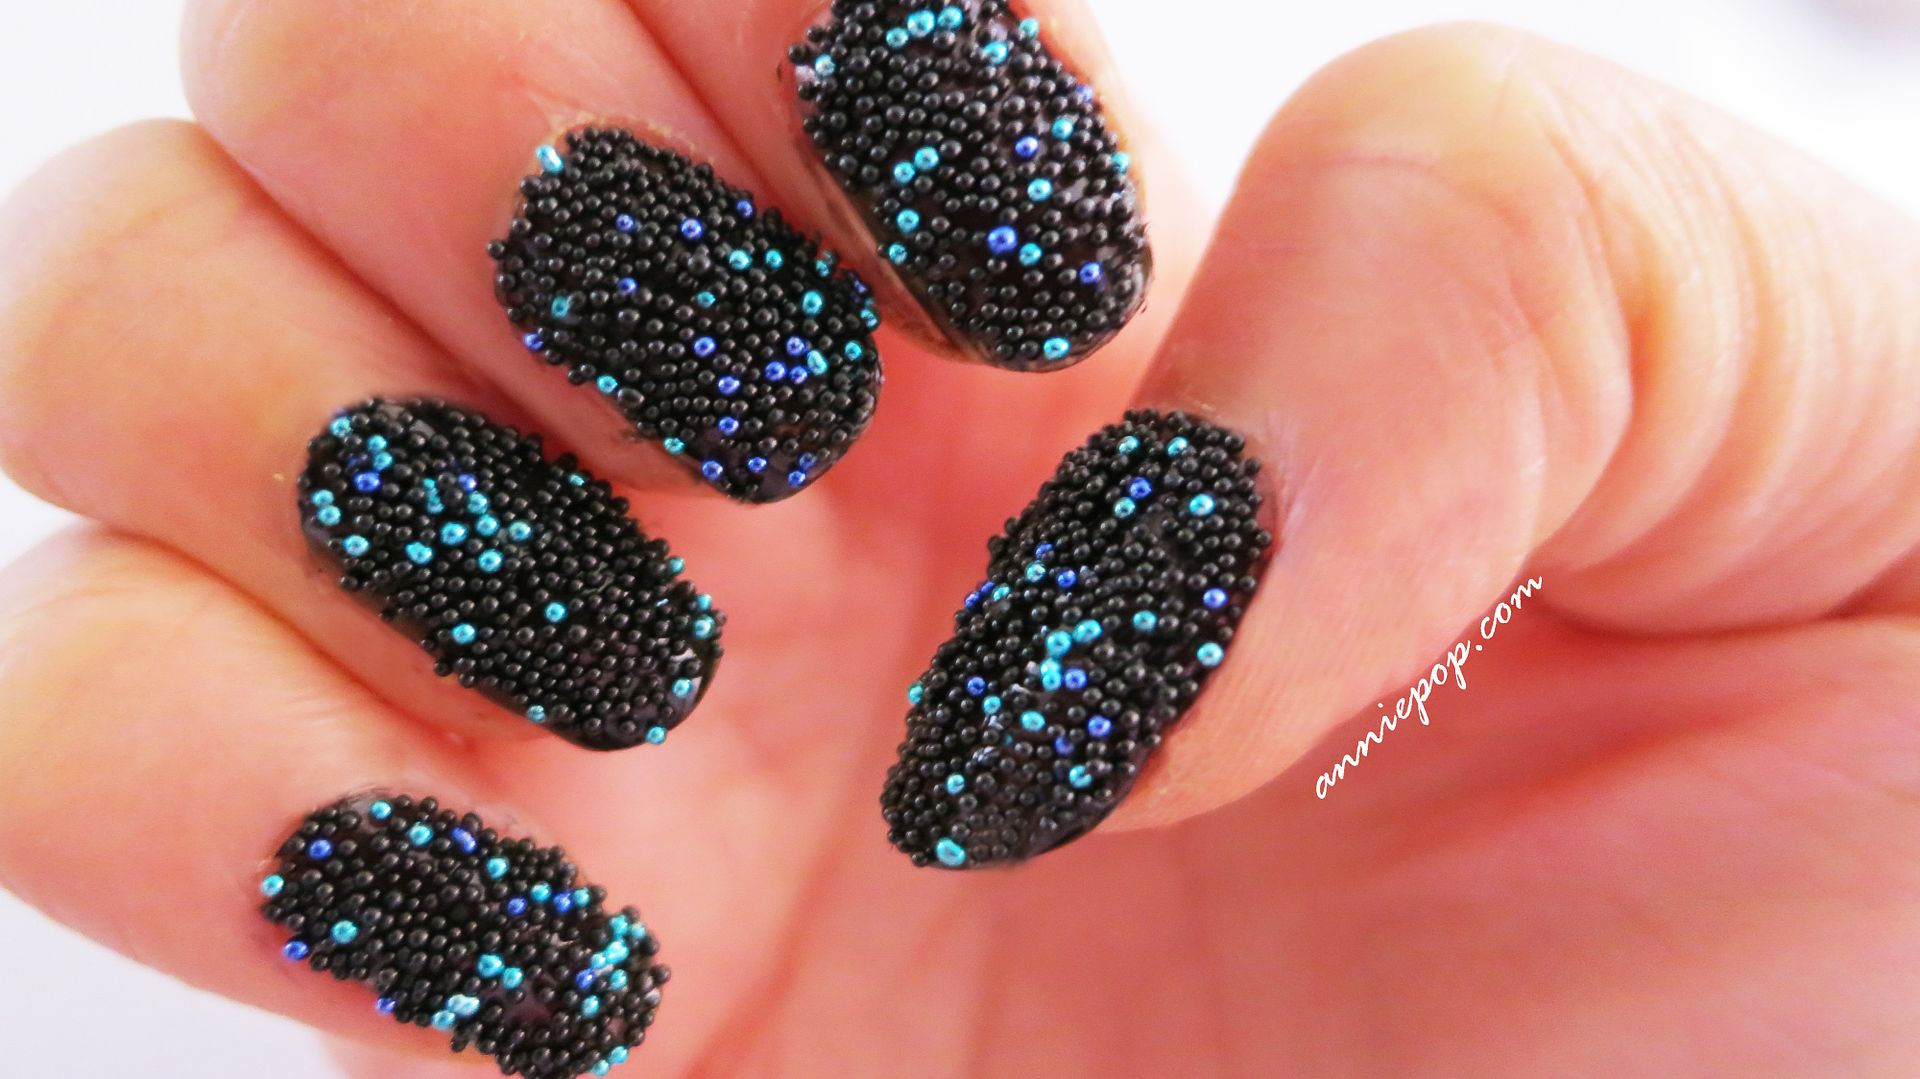 Caviar nails using microbeads